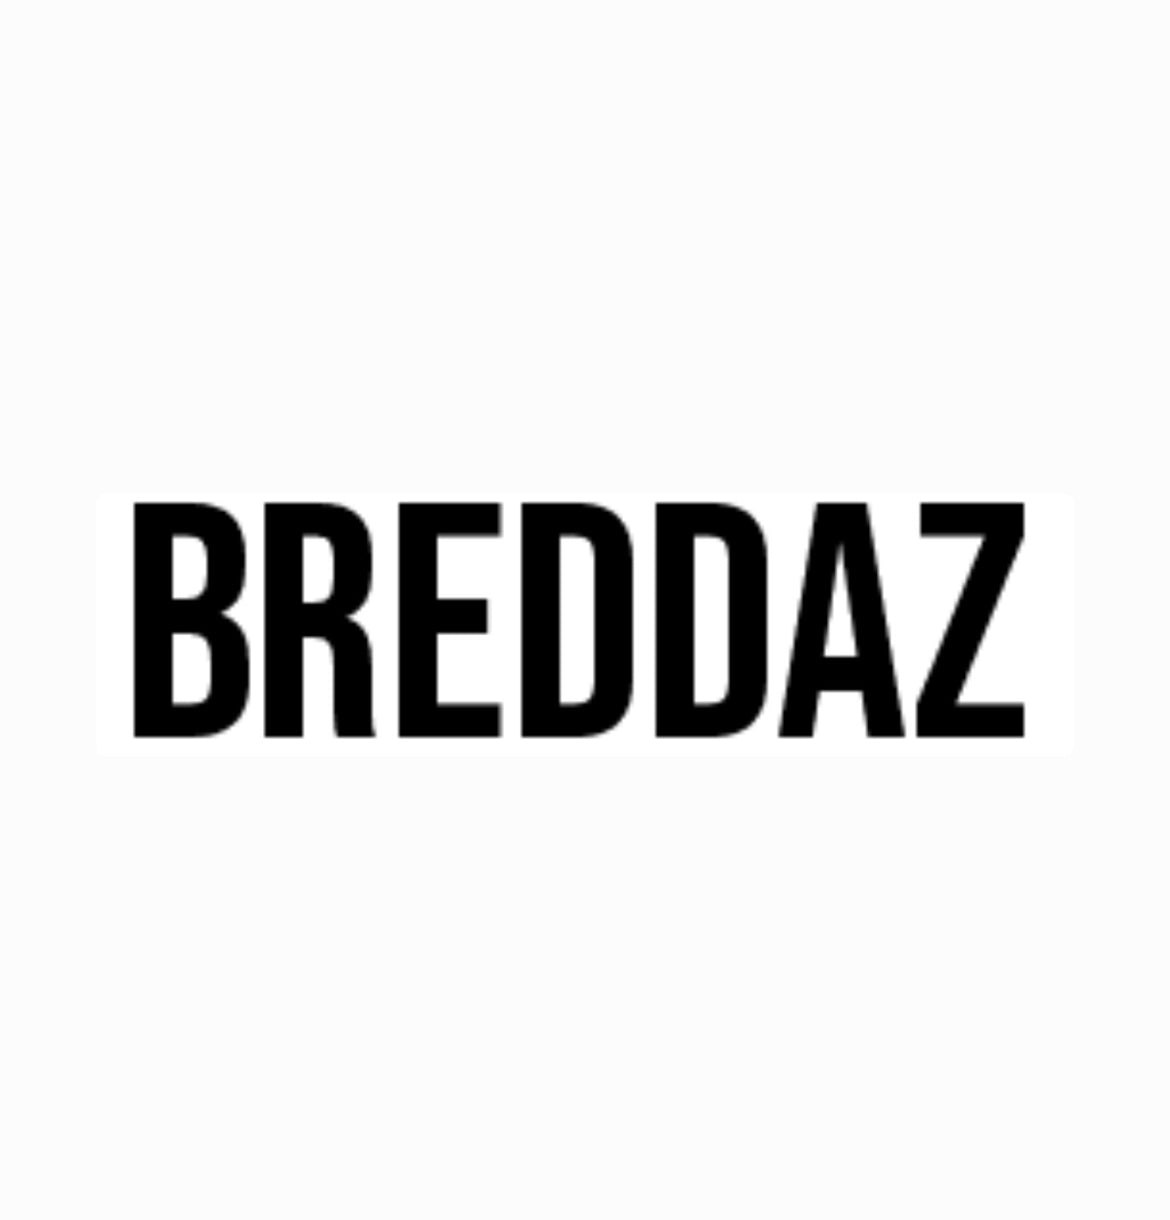 Breddaz Official